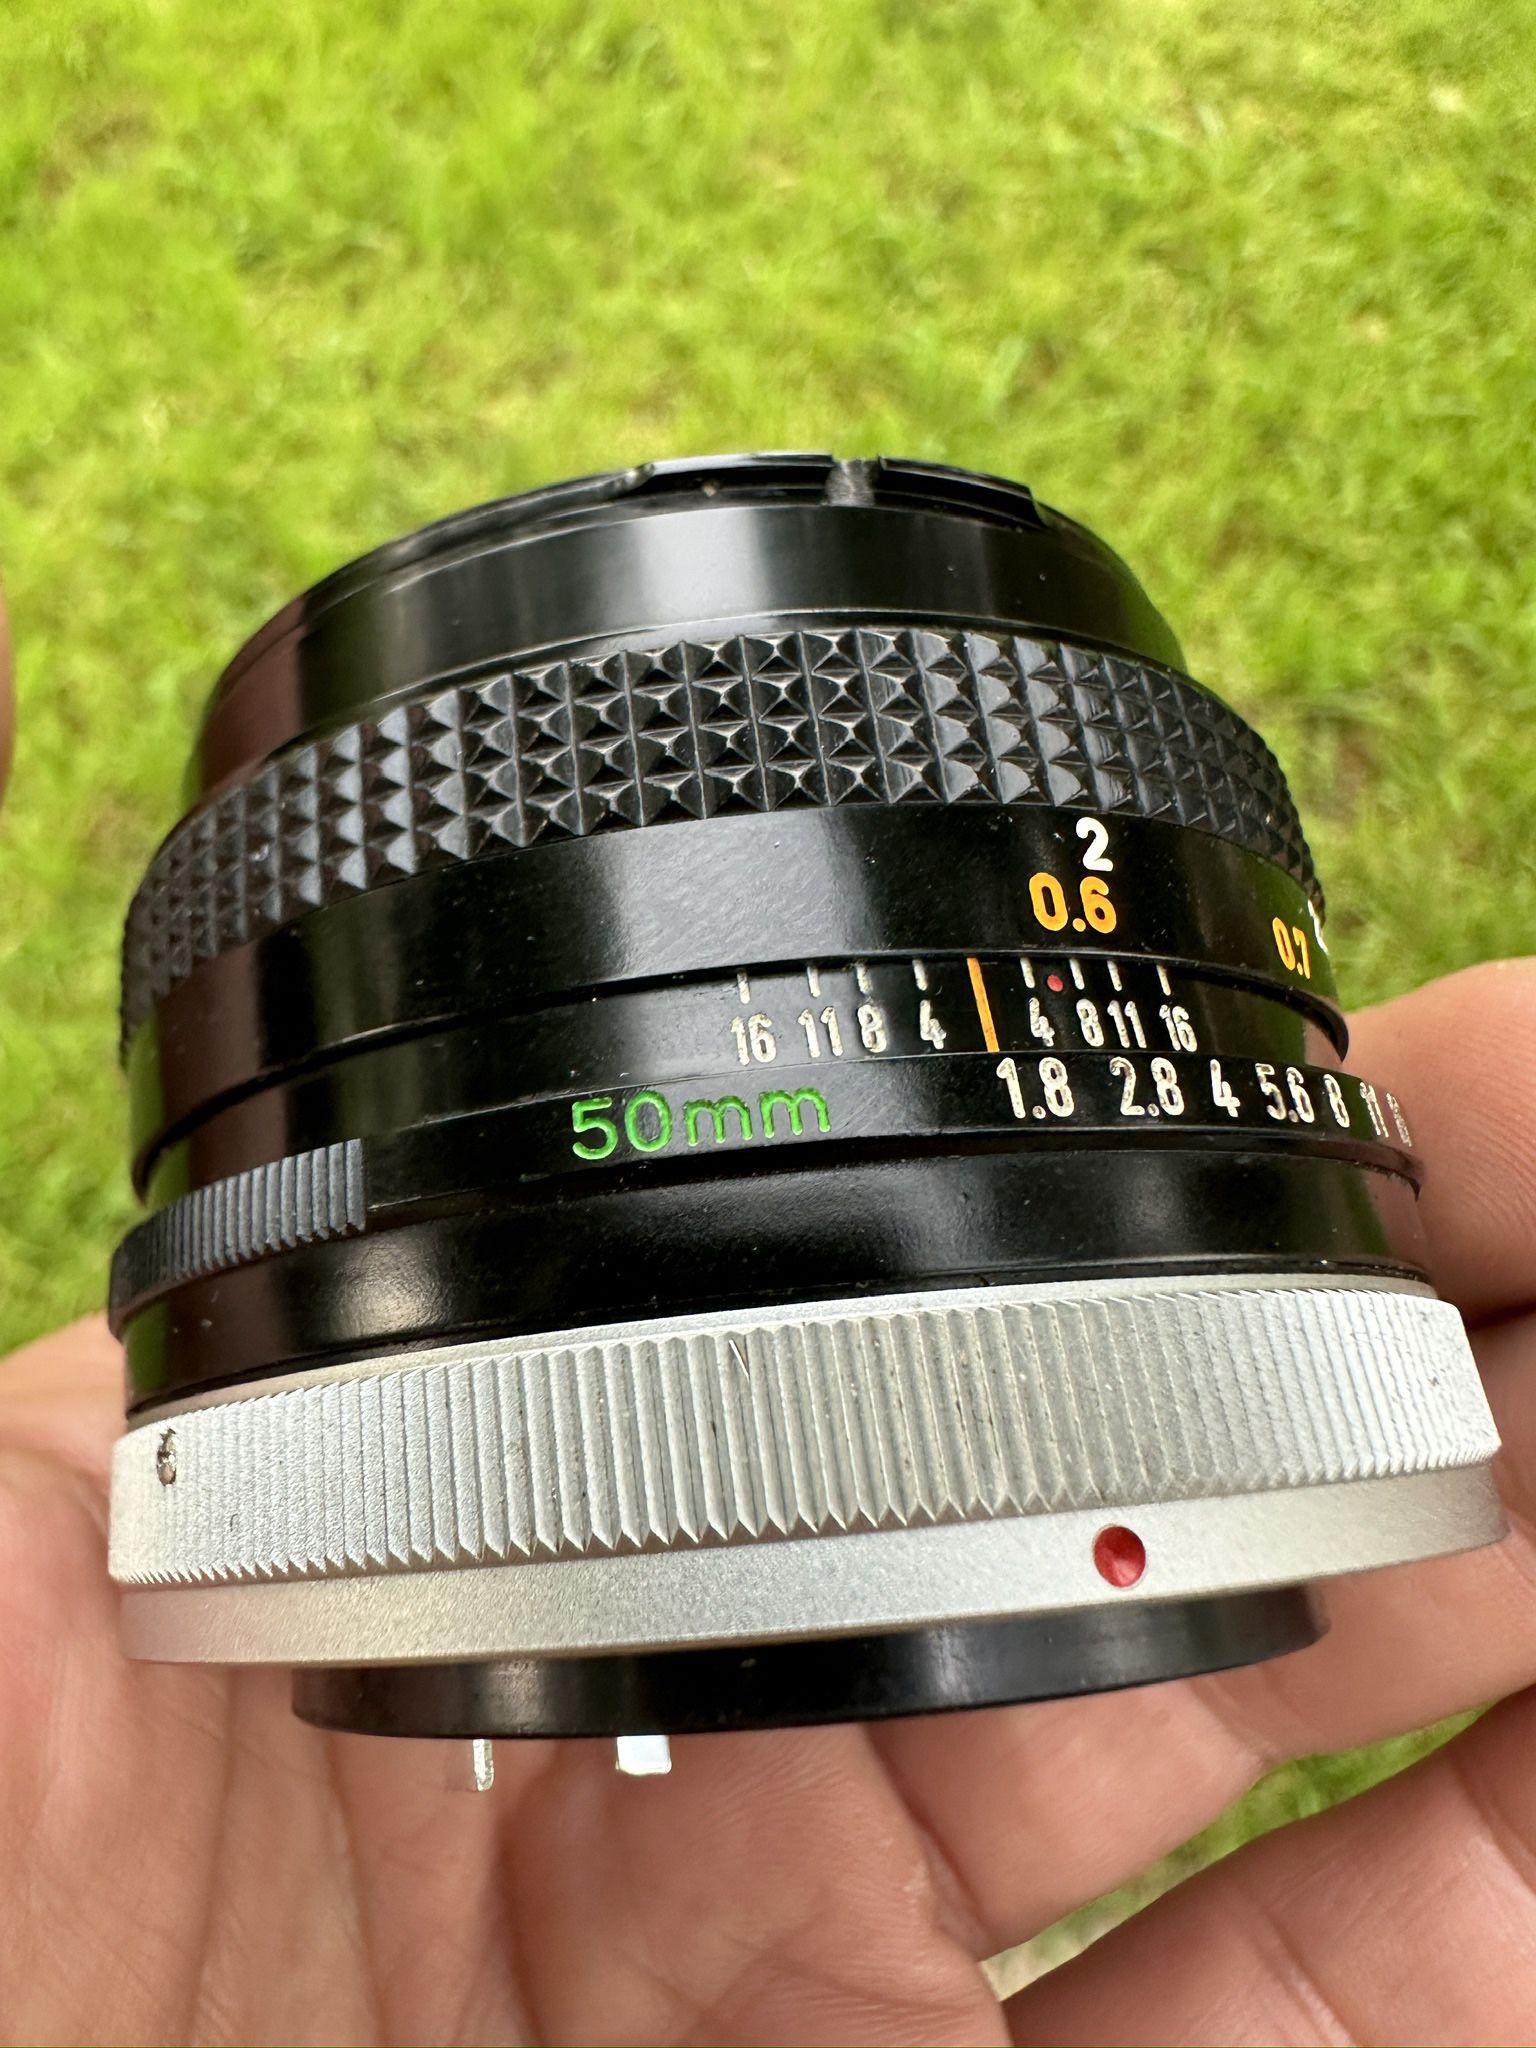 Canon FD 50mm 1.8 S.C. lens